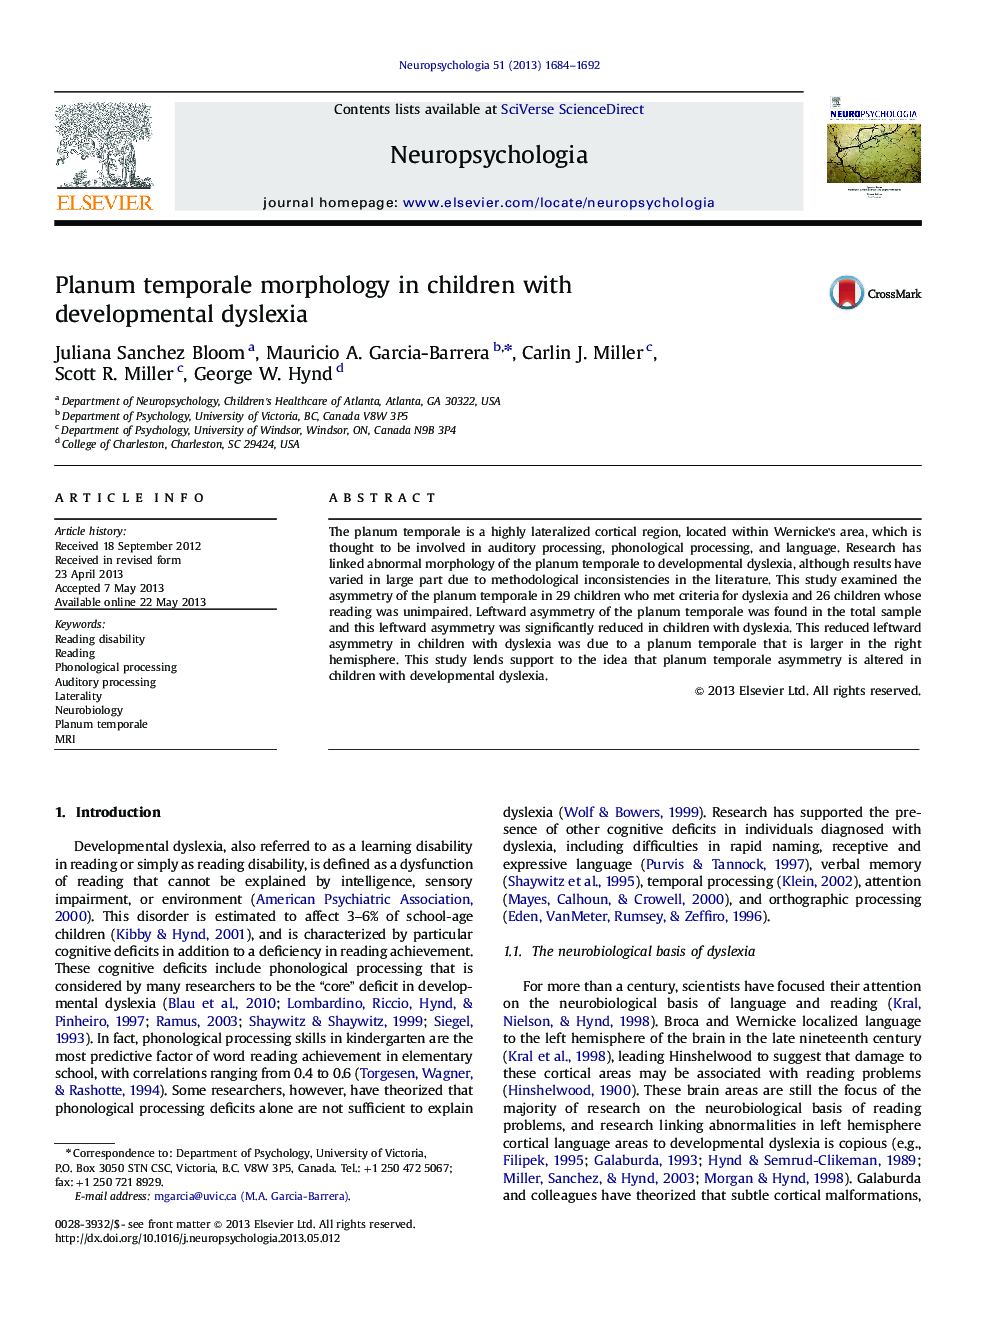 Planum temporale morphology in children with developmental dyslexia